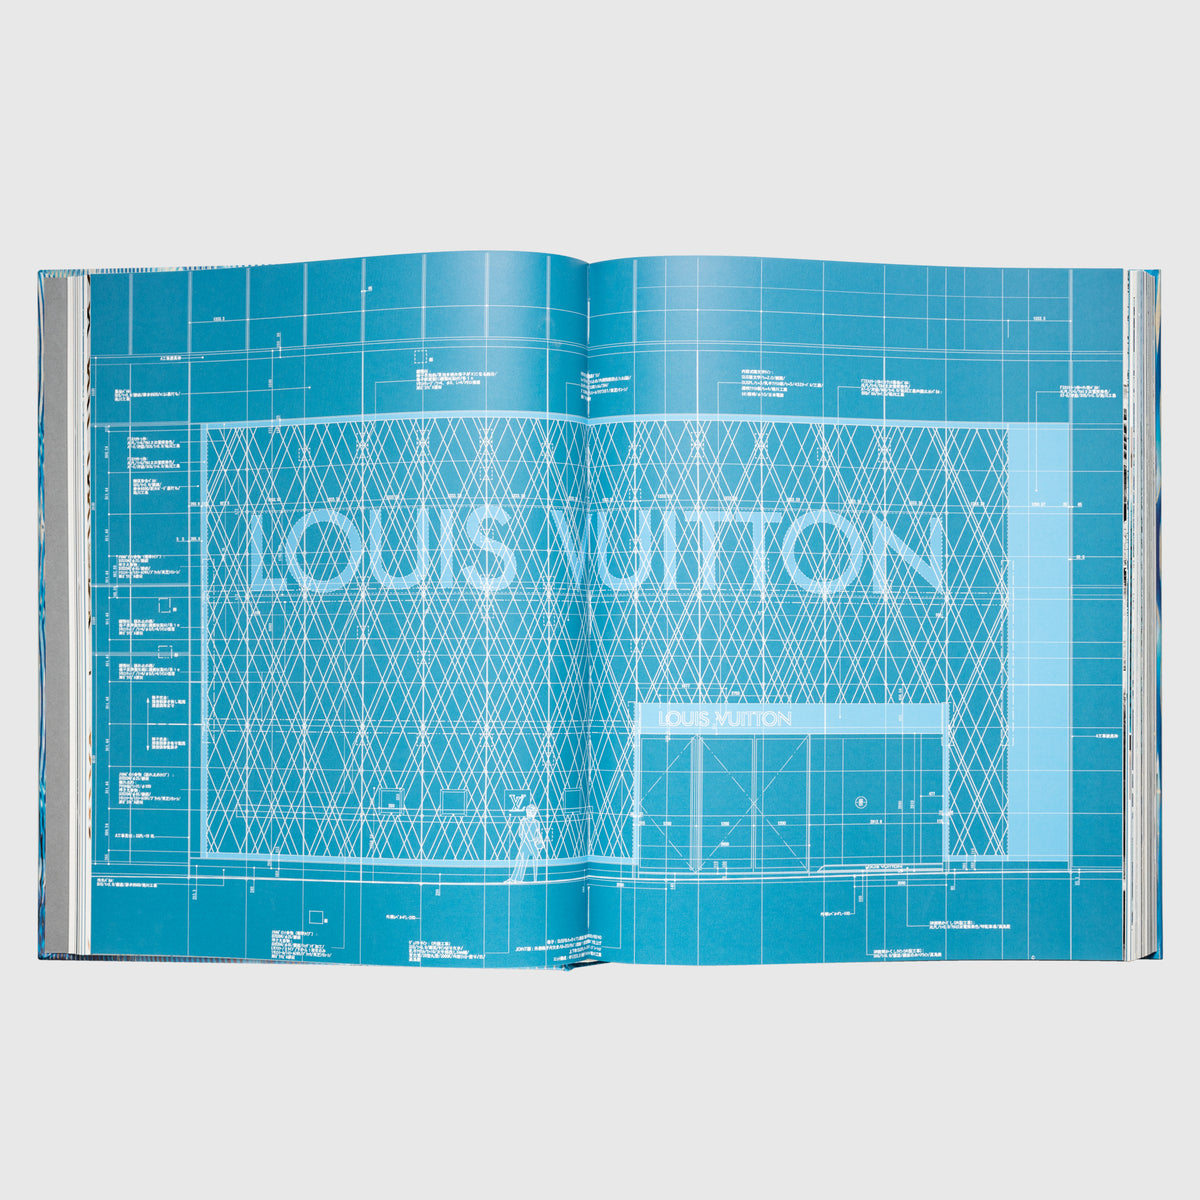 Louis Vuitton Tokyo travel guide : r/Tokyo